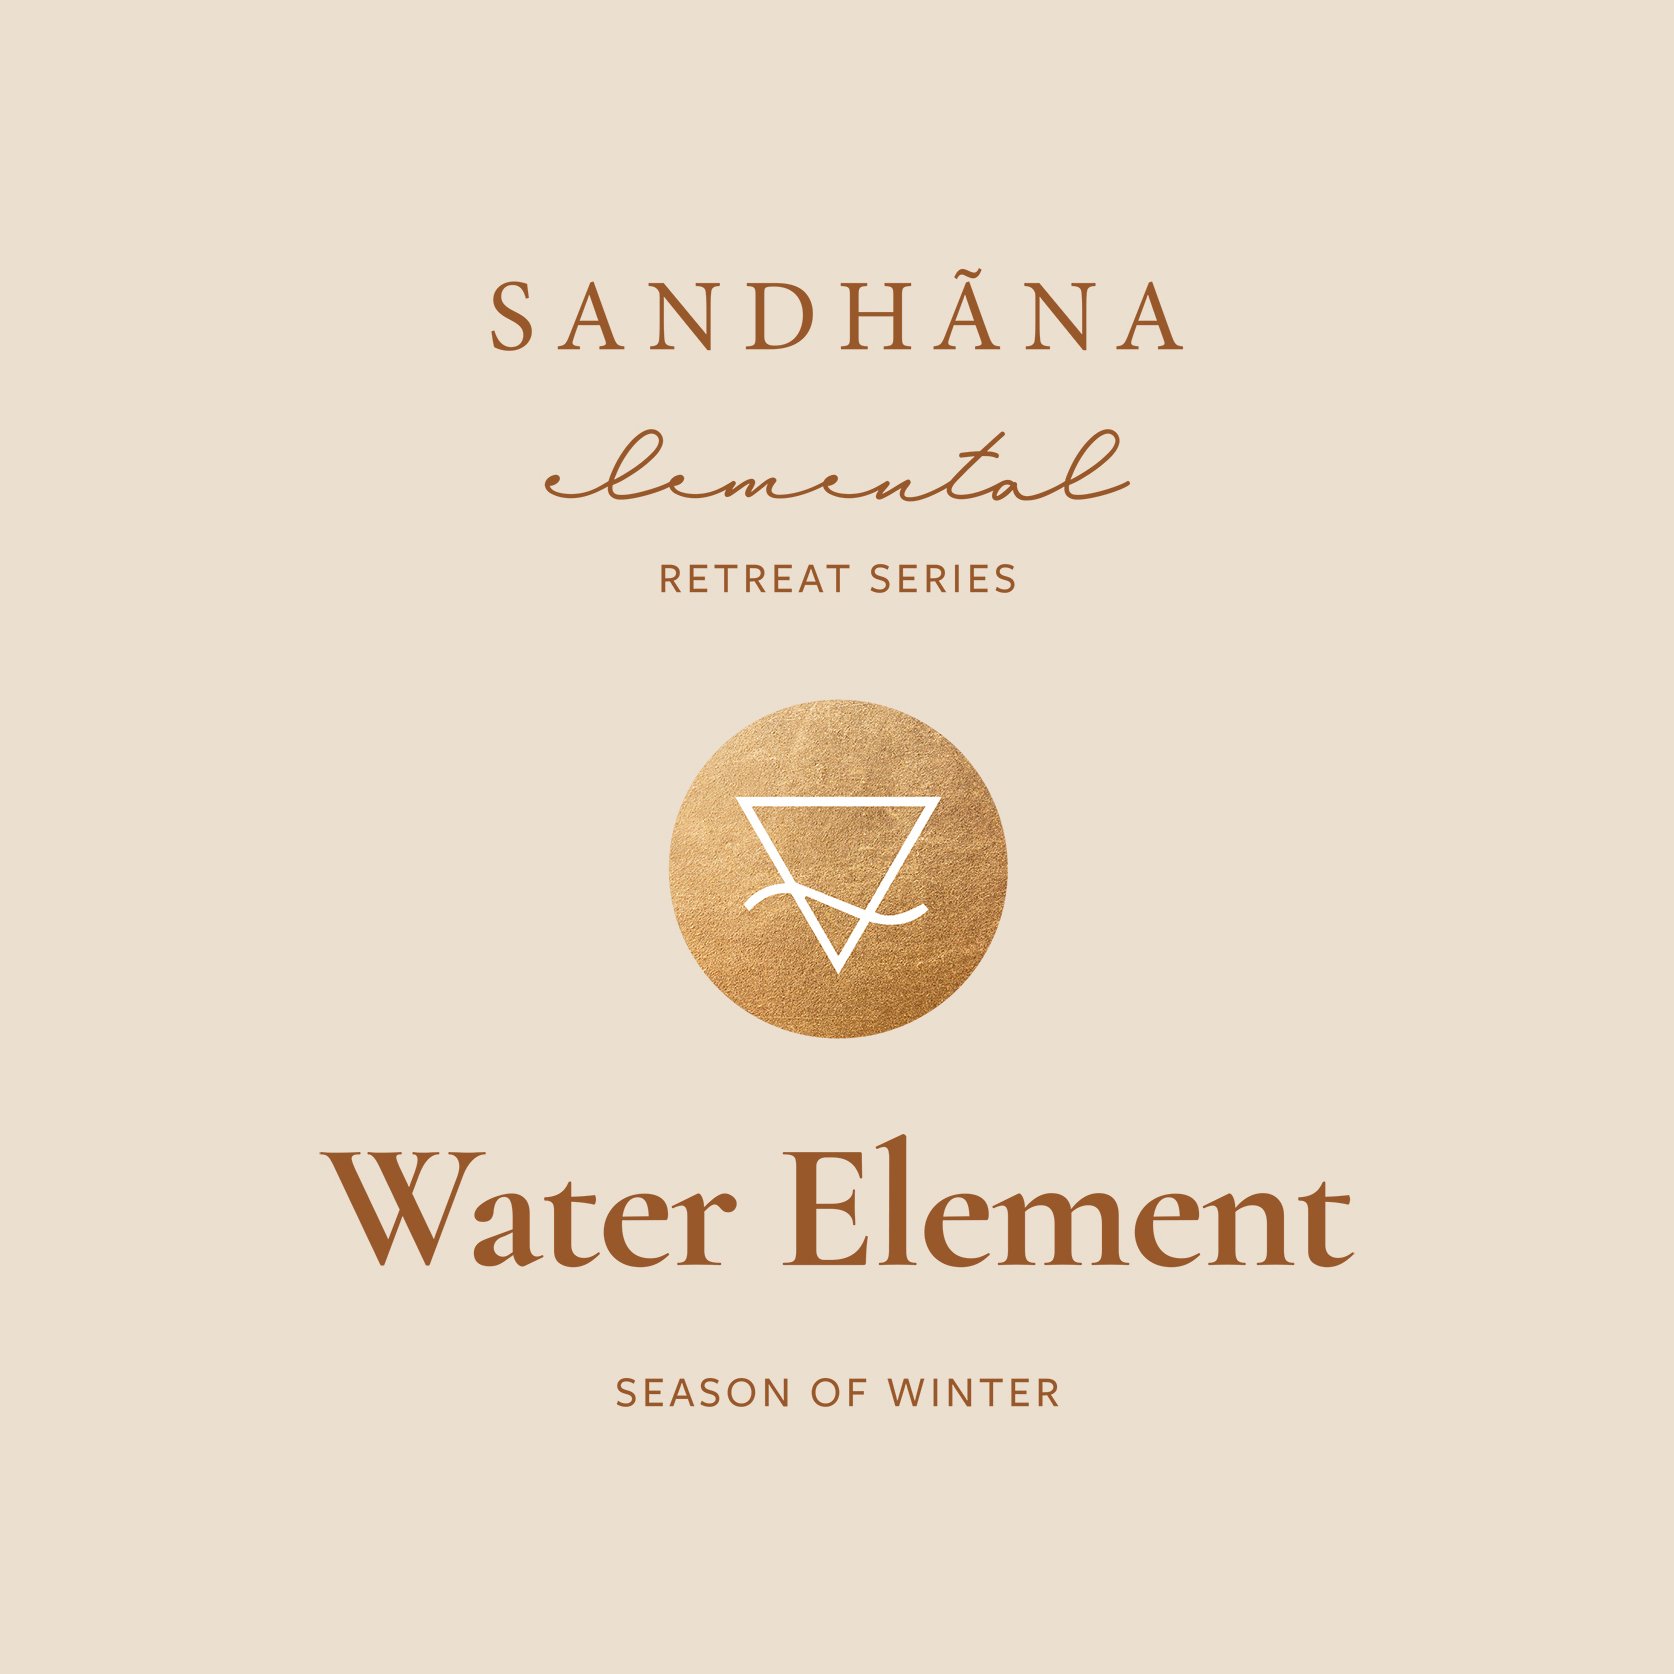 Sandhana_WaterElement_retreats_title.jpg